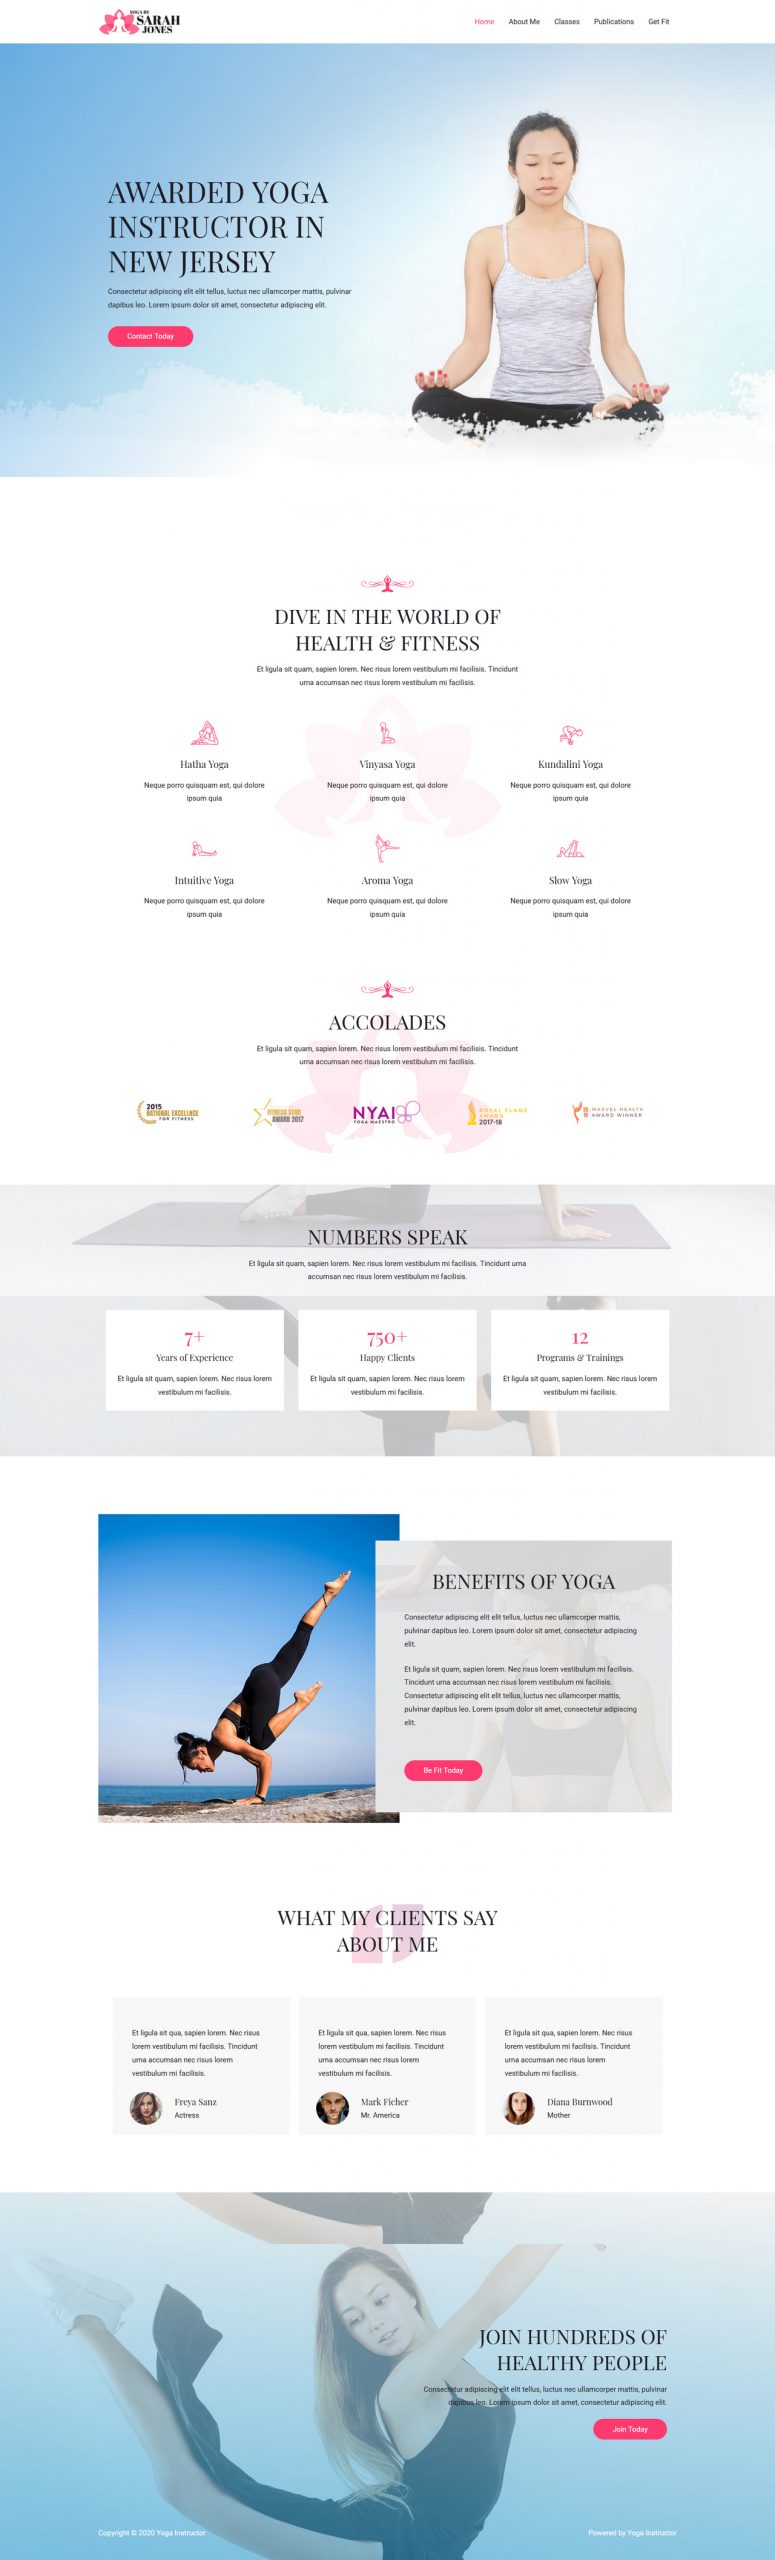 Fagowi.com Website Design Templates For Yoga Instructor - Home Page Image